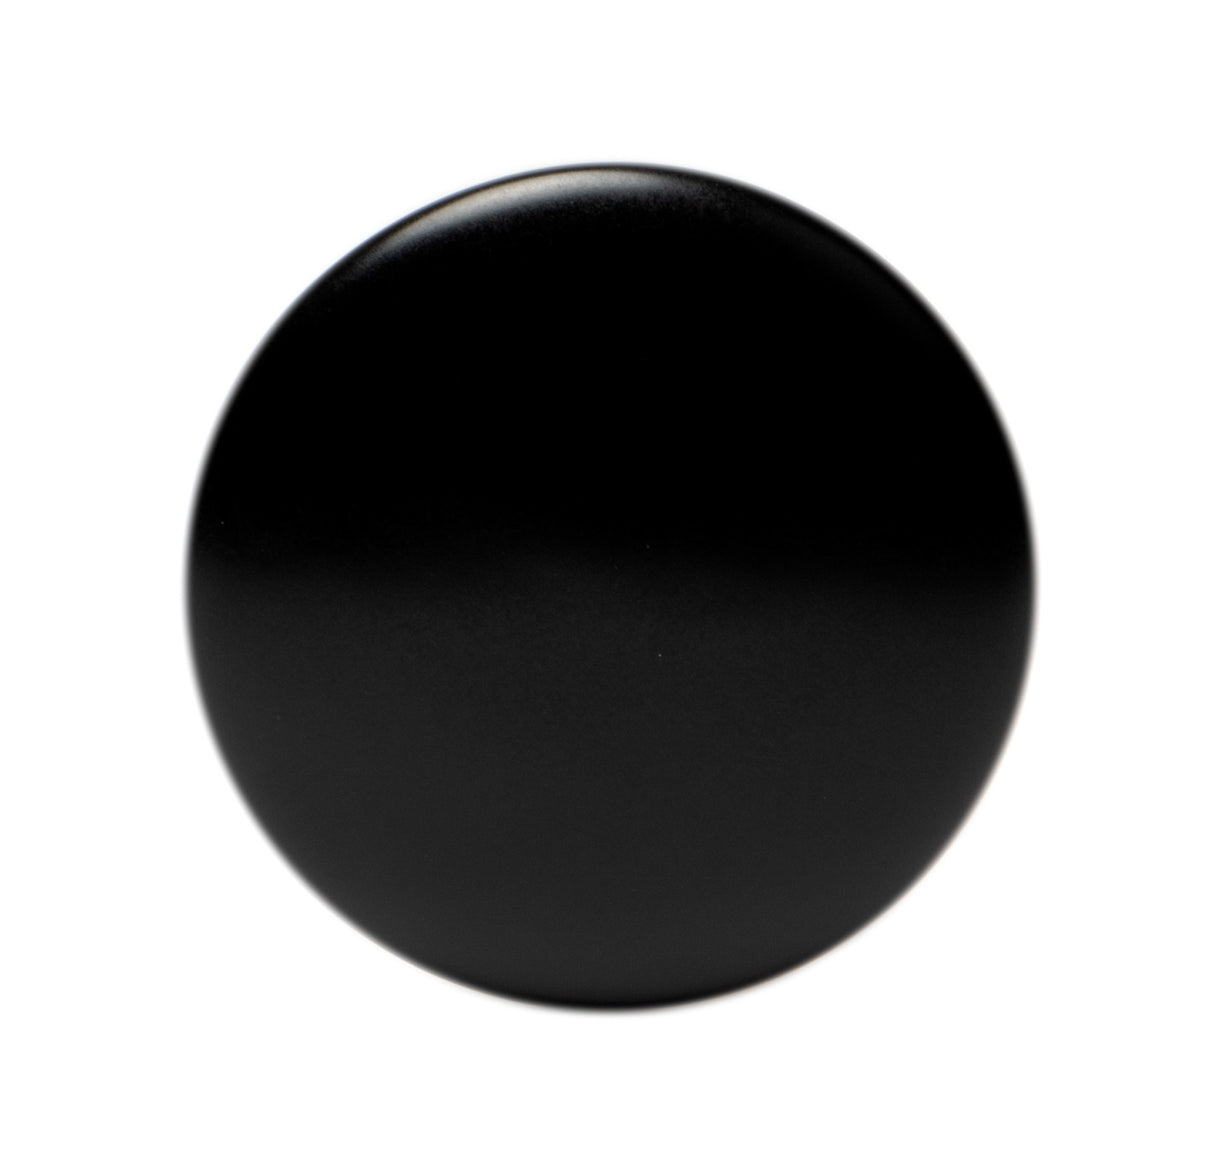 ALFI brand AB8055-BM Black Matte Ceramic Mushroom Top Pop Up Drain for Sinks without Overflow